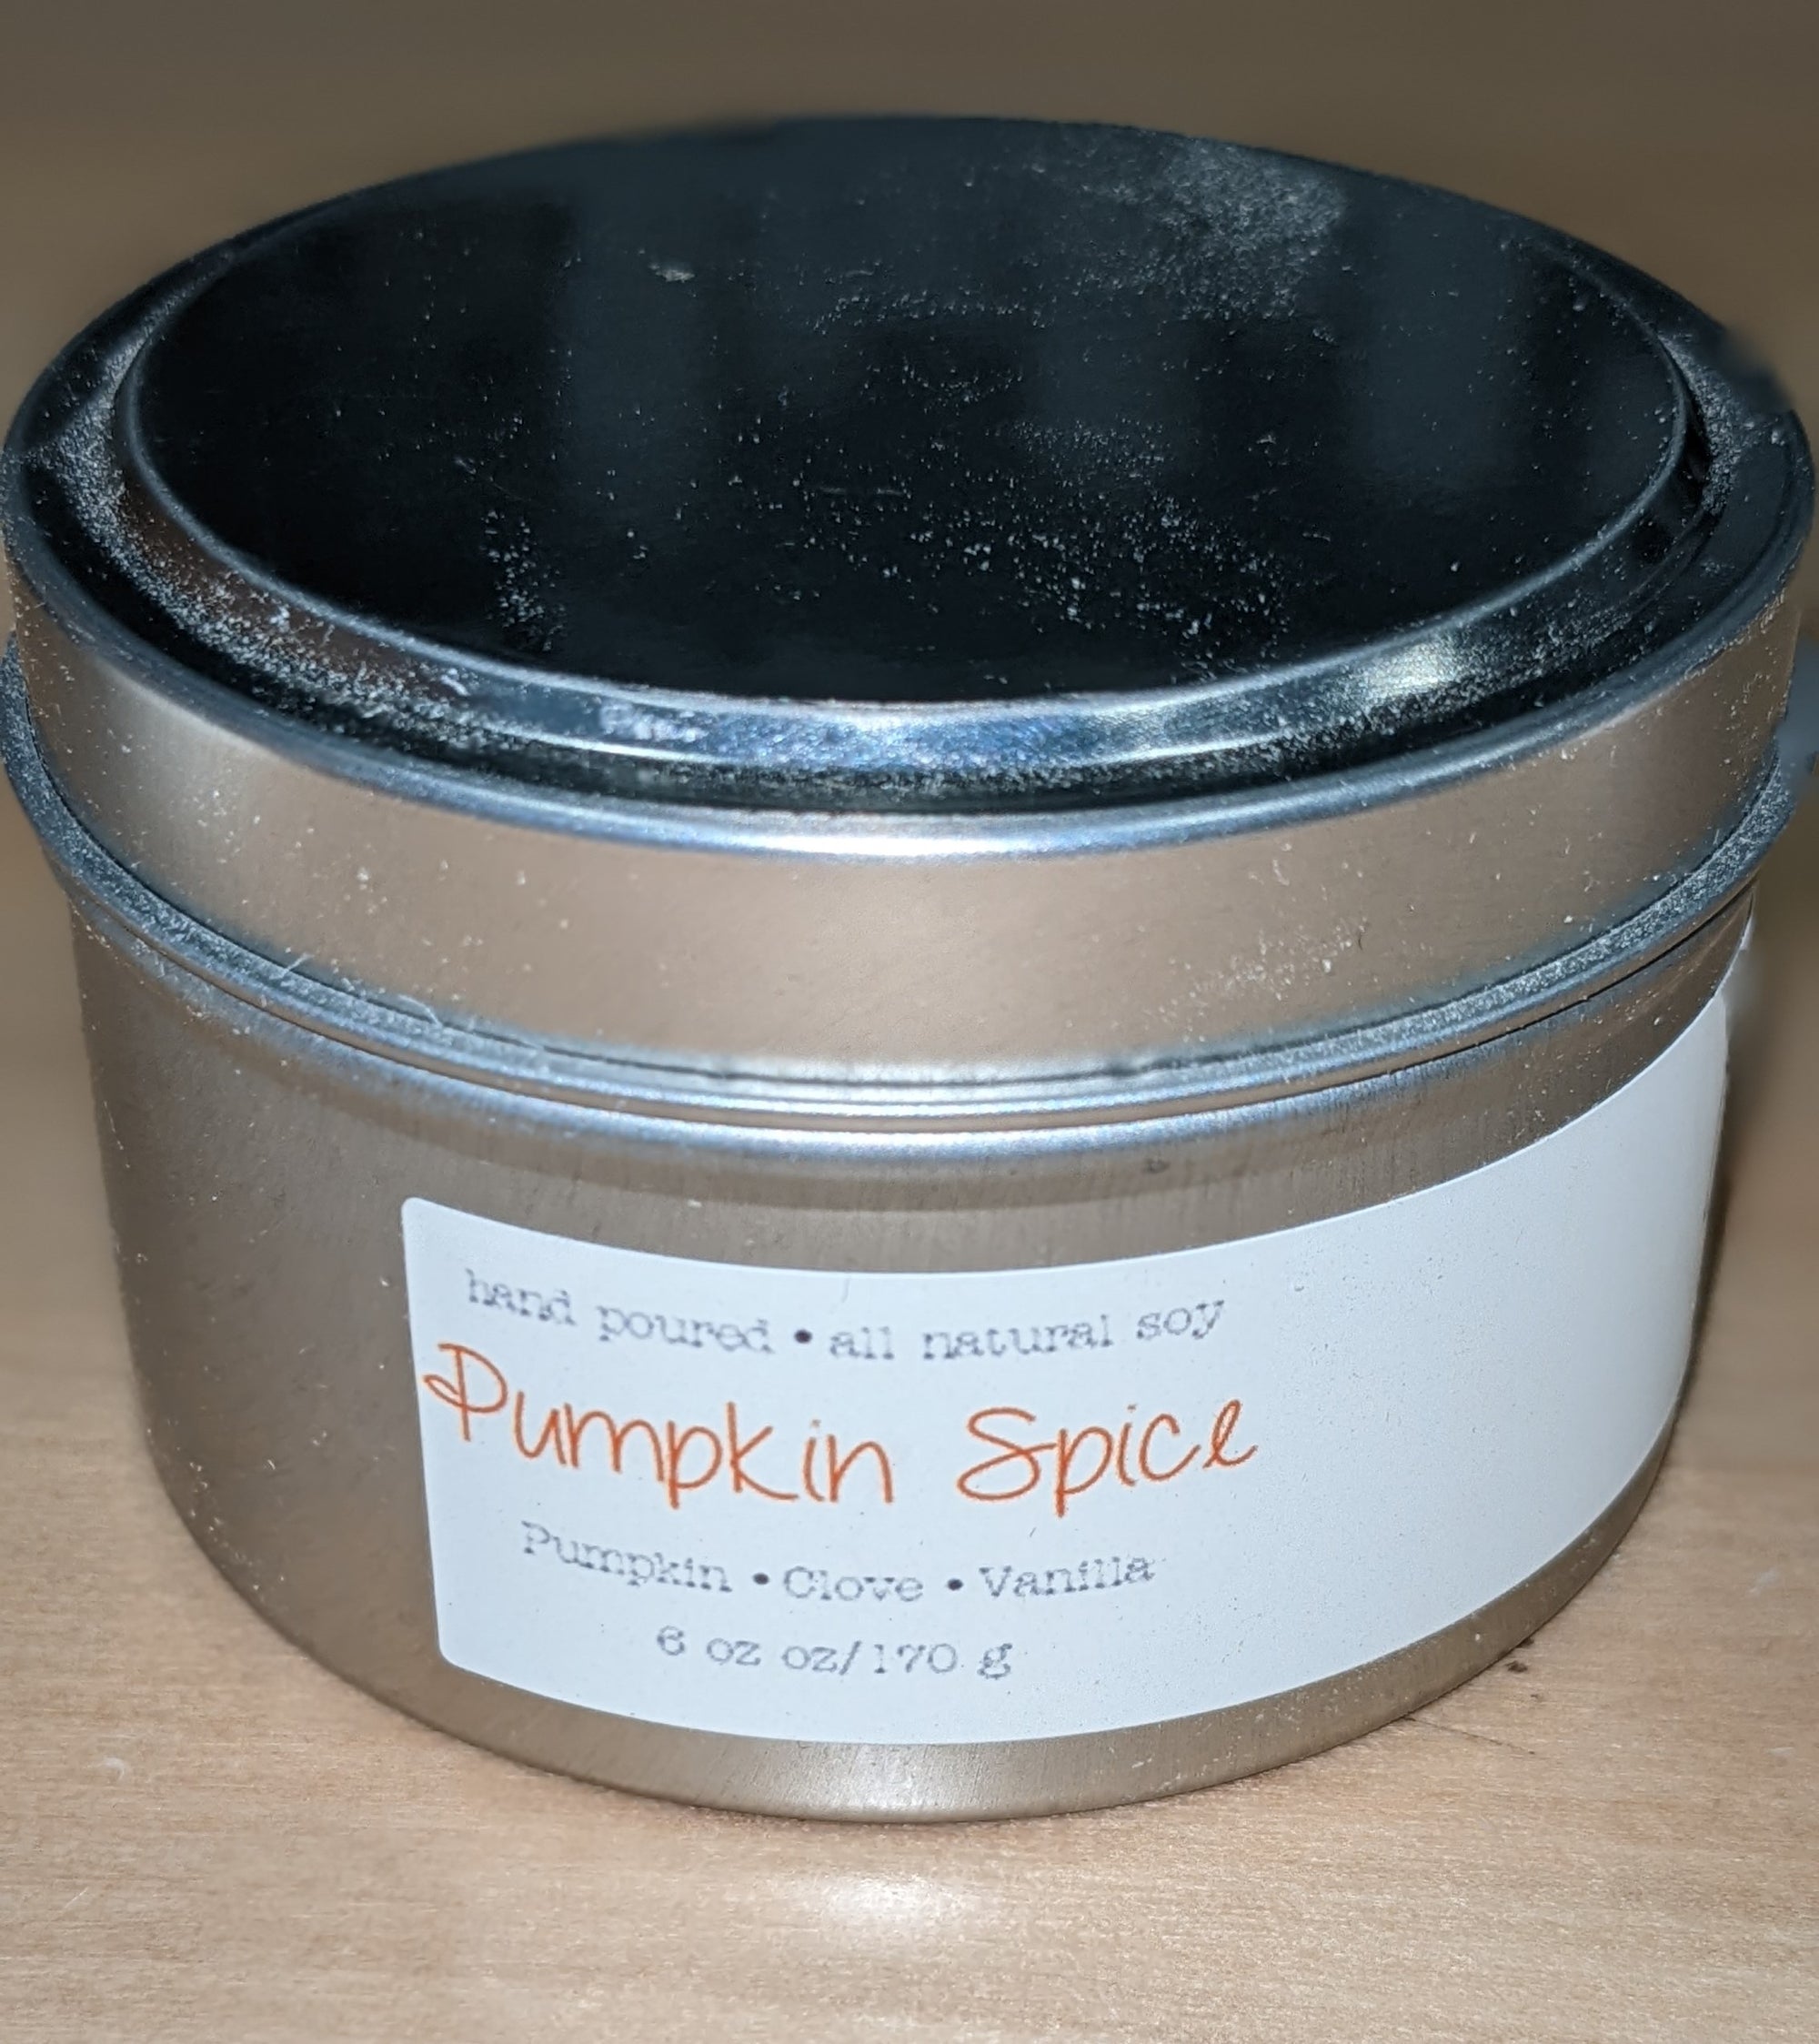 Lamb & Kiss - Pumpkin Spice 6oz tin can candle